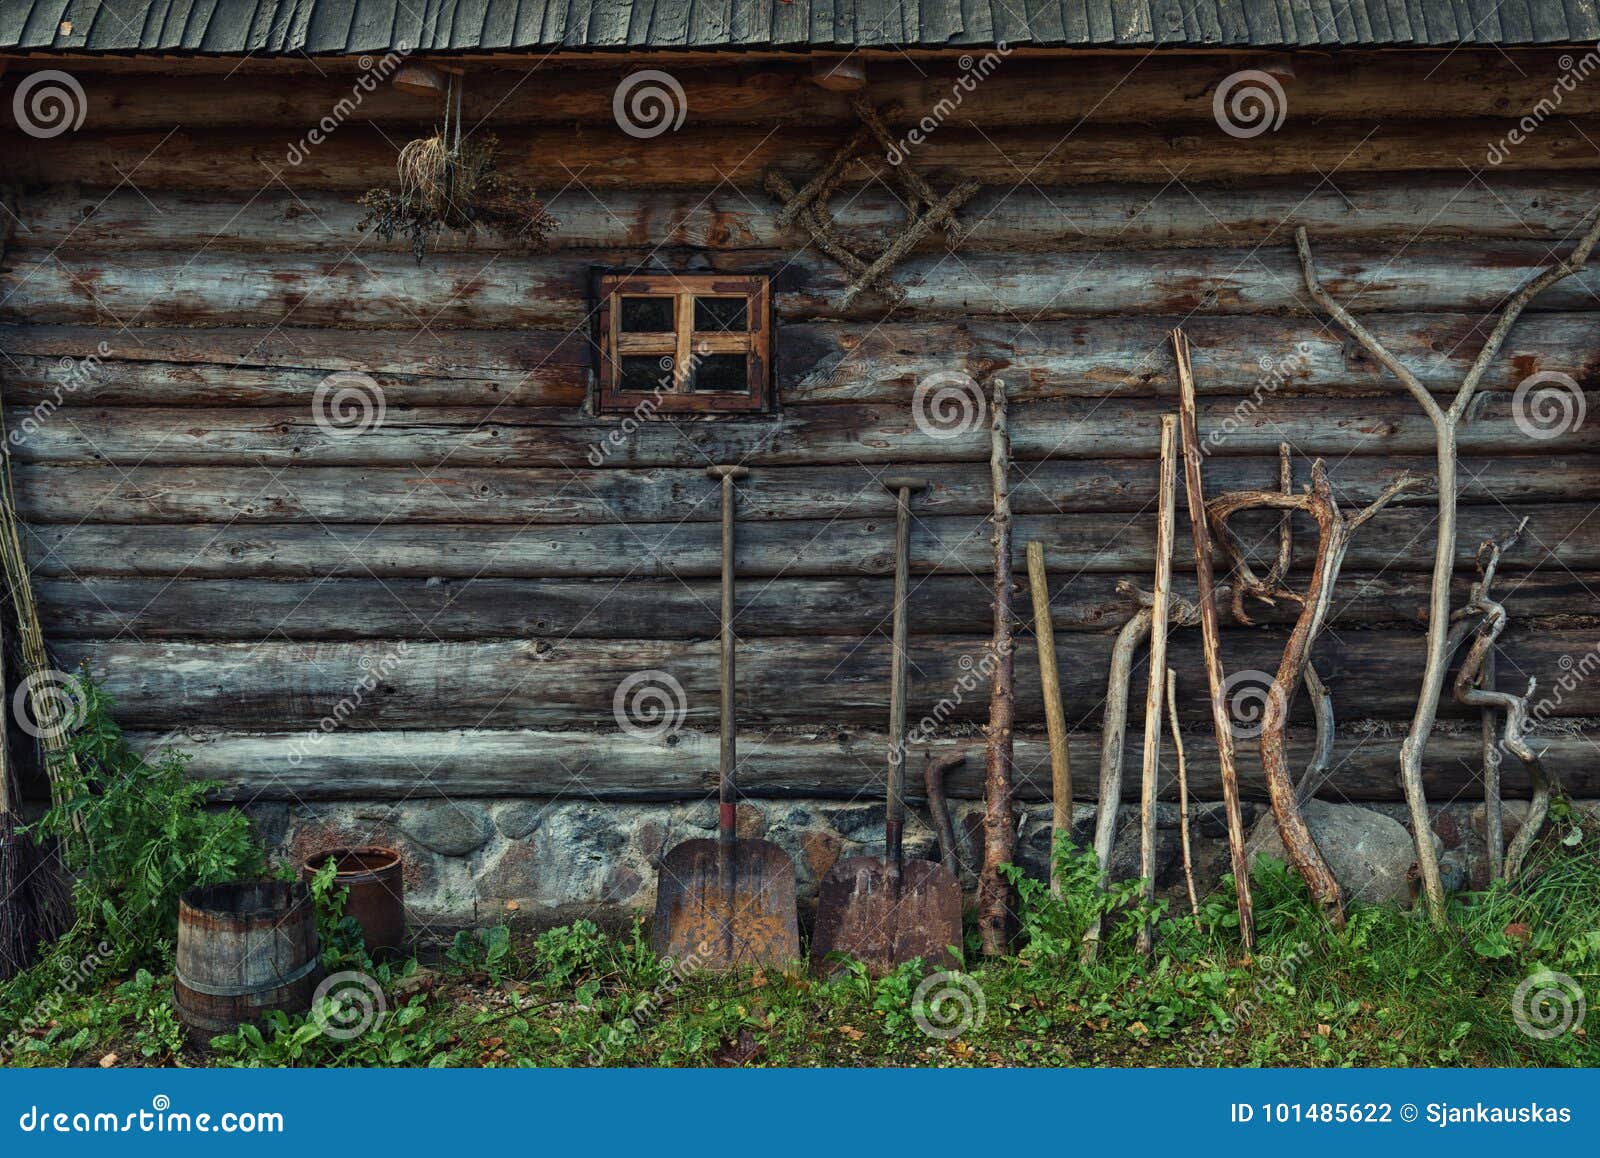 wooden barn wall texture and farming tools